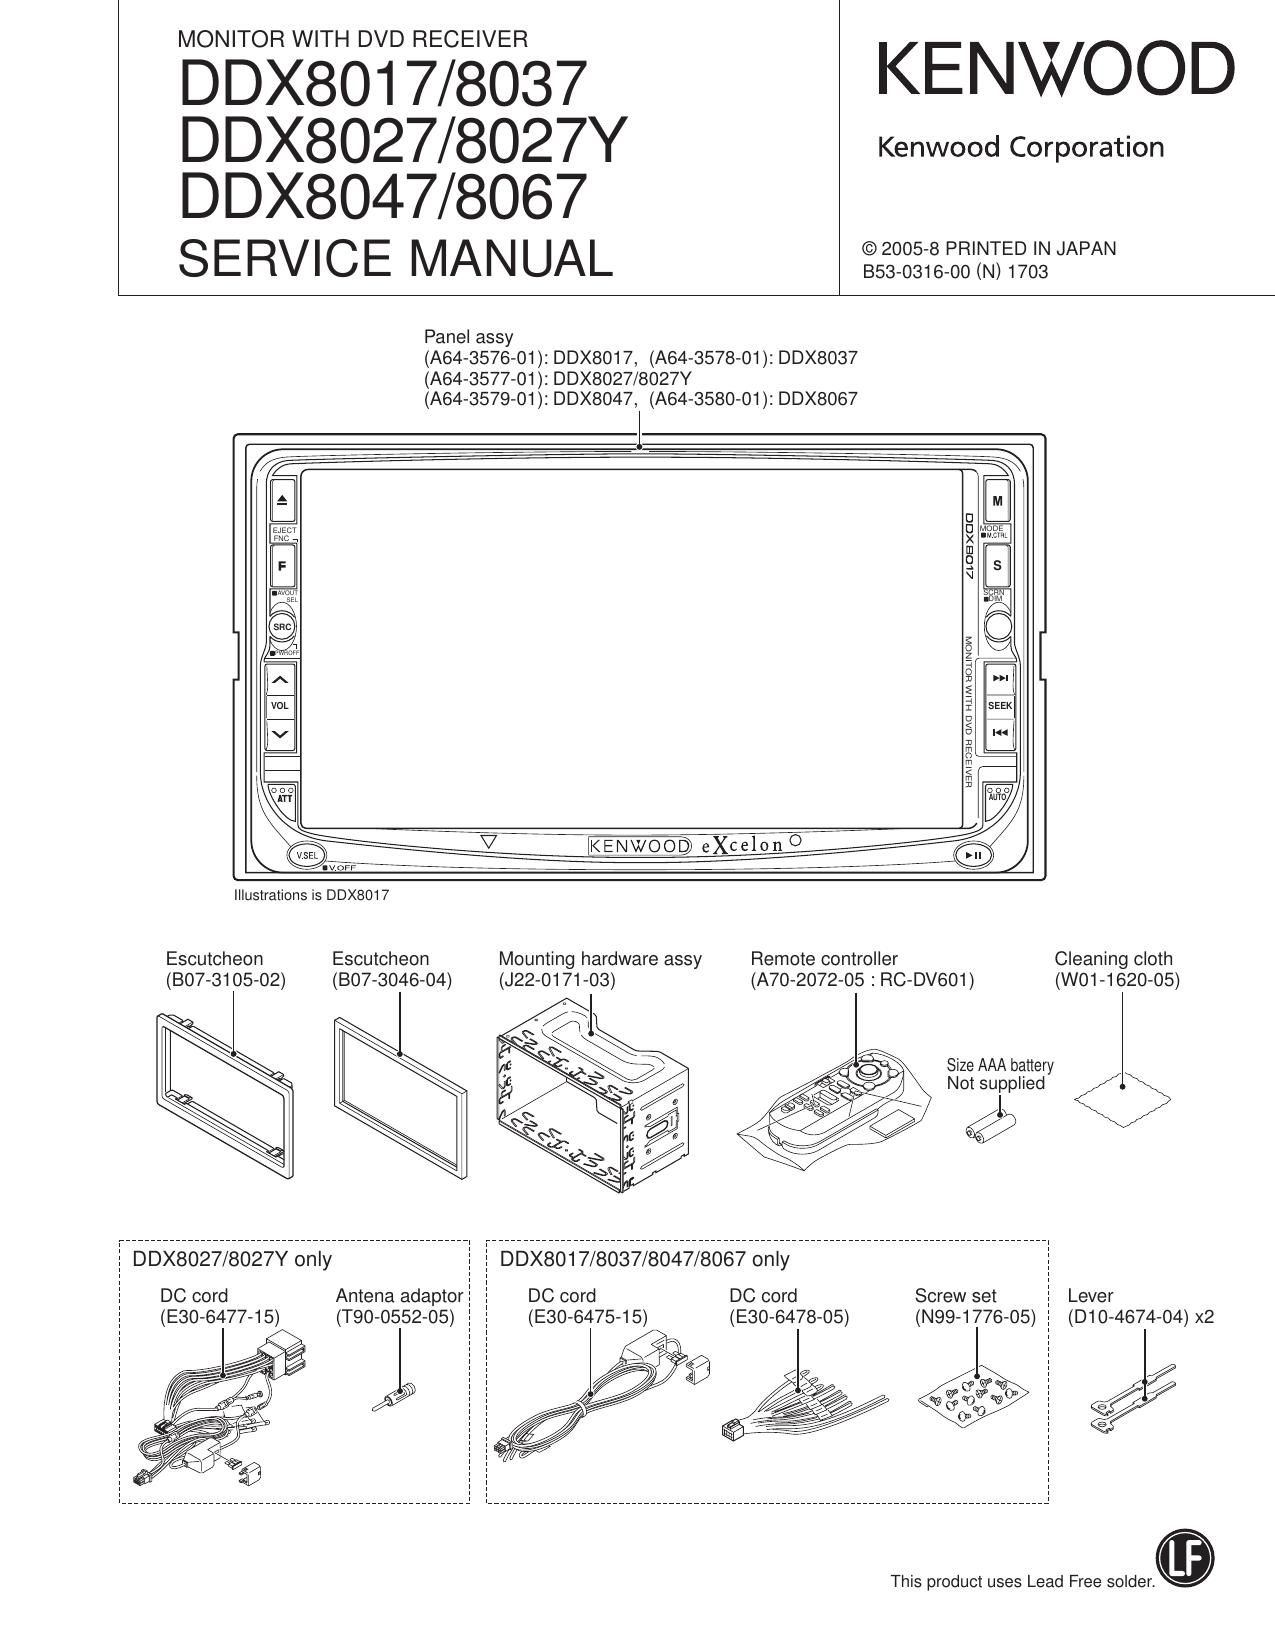 Kenwood DDX 8037 Service Manual